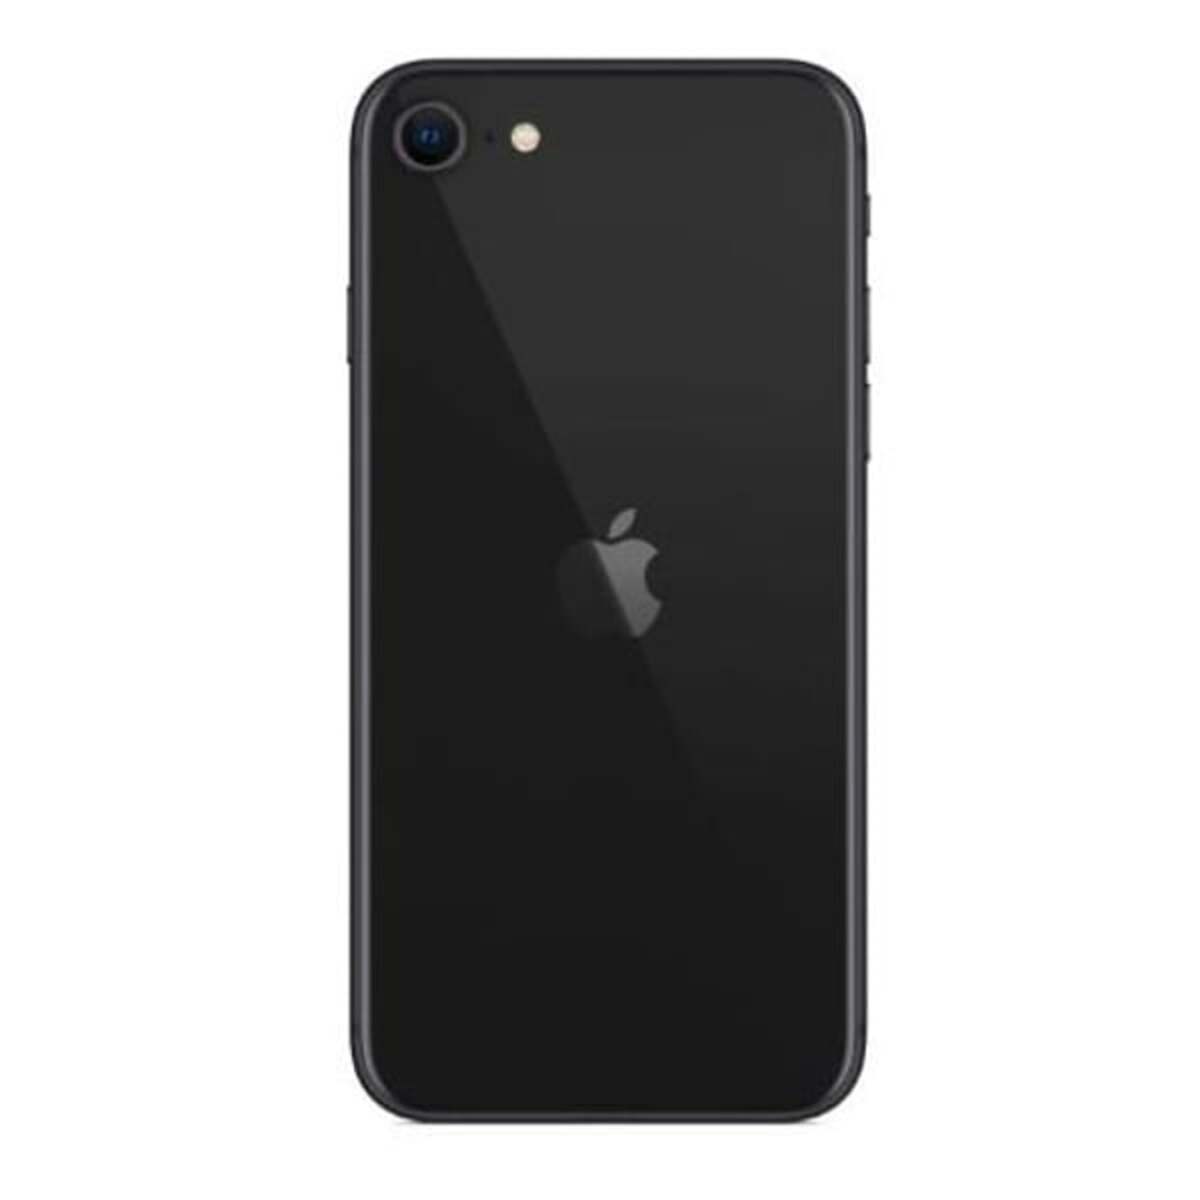 Apple iPhone SE 2020 (2nd-gen) With Facetime, 3 GB RAM, 64 GB Internal Storage, Black, International Specs